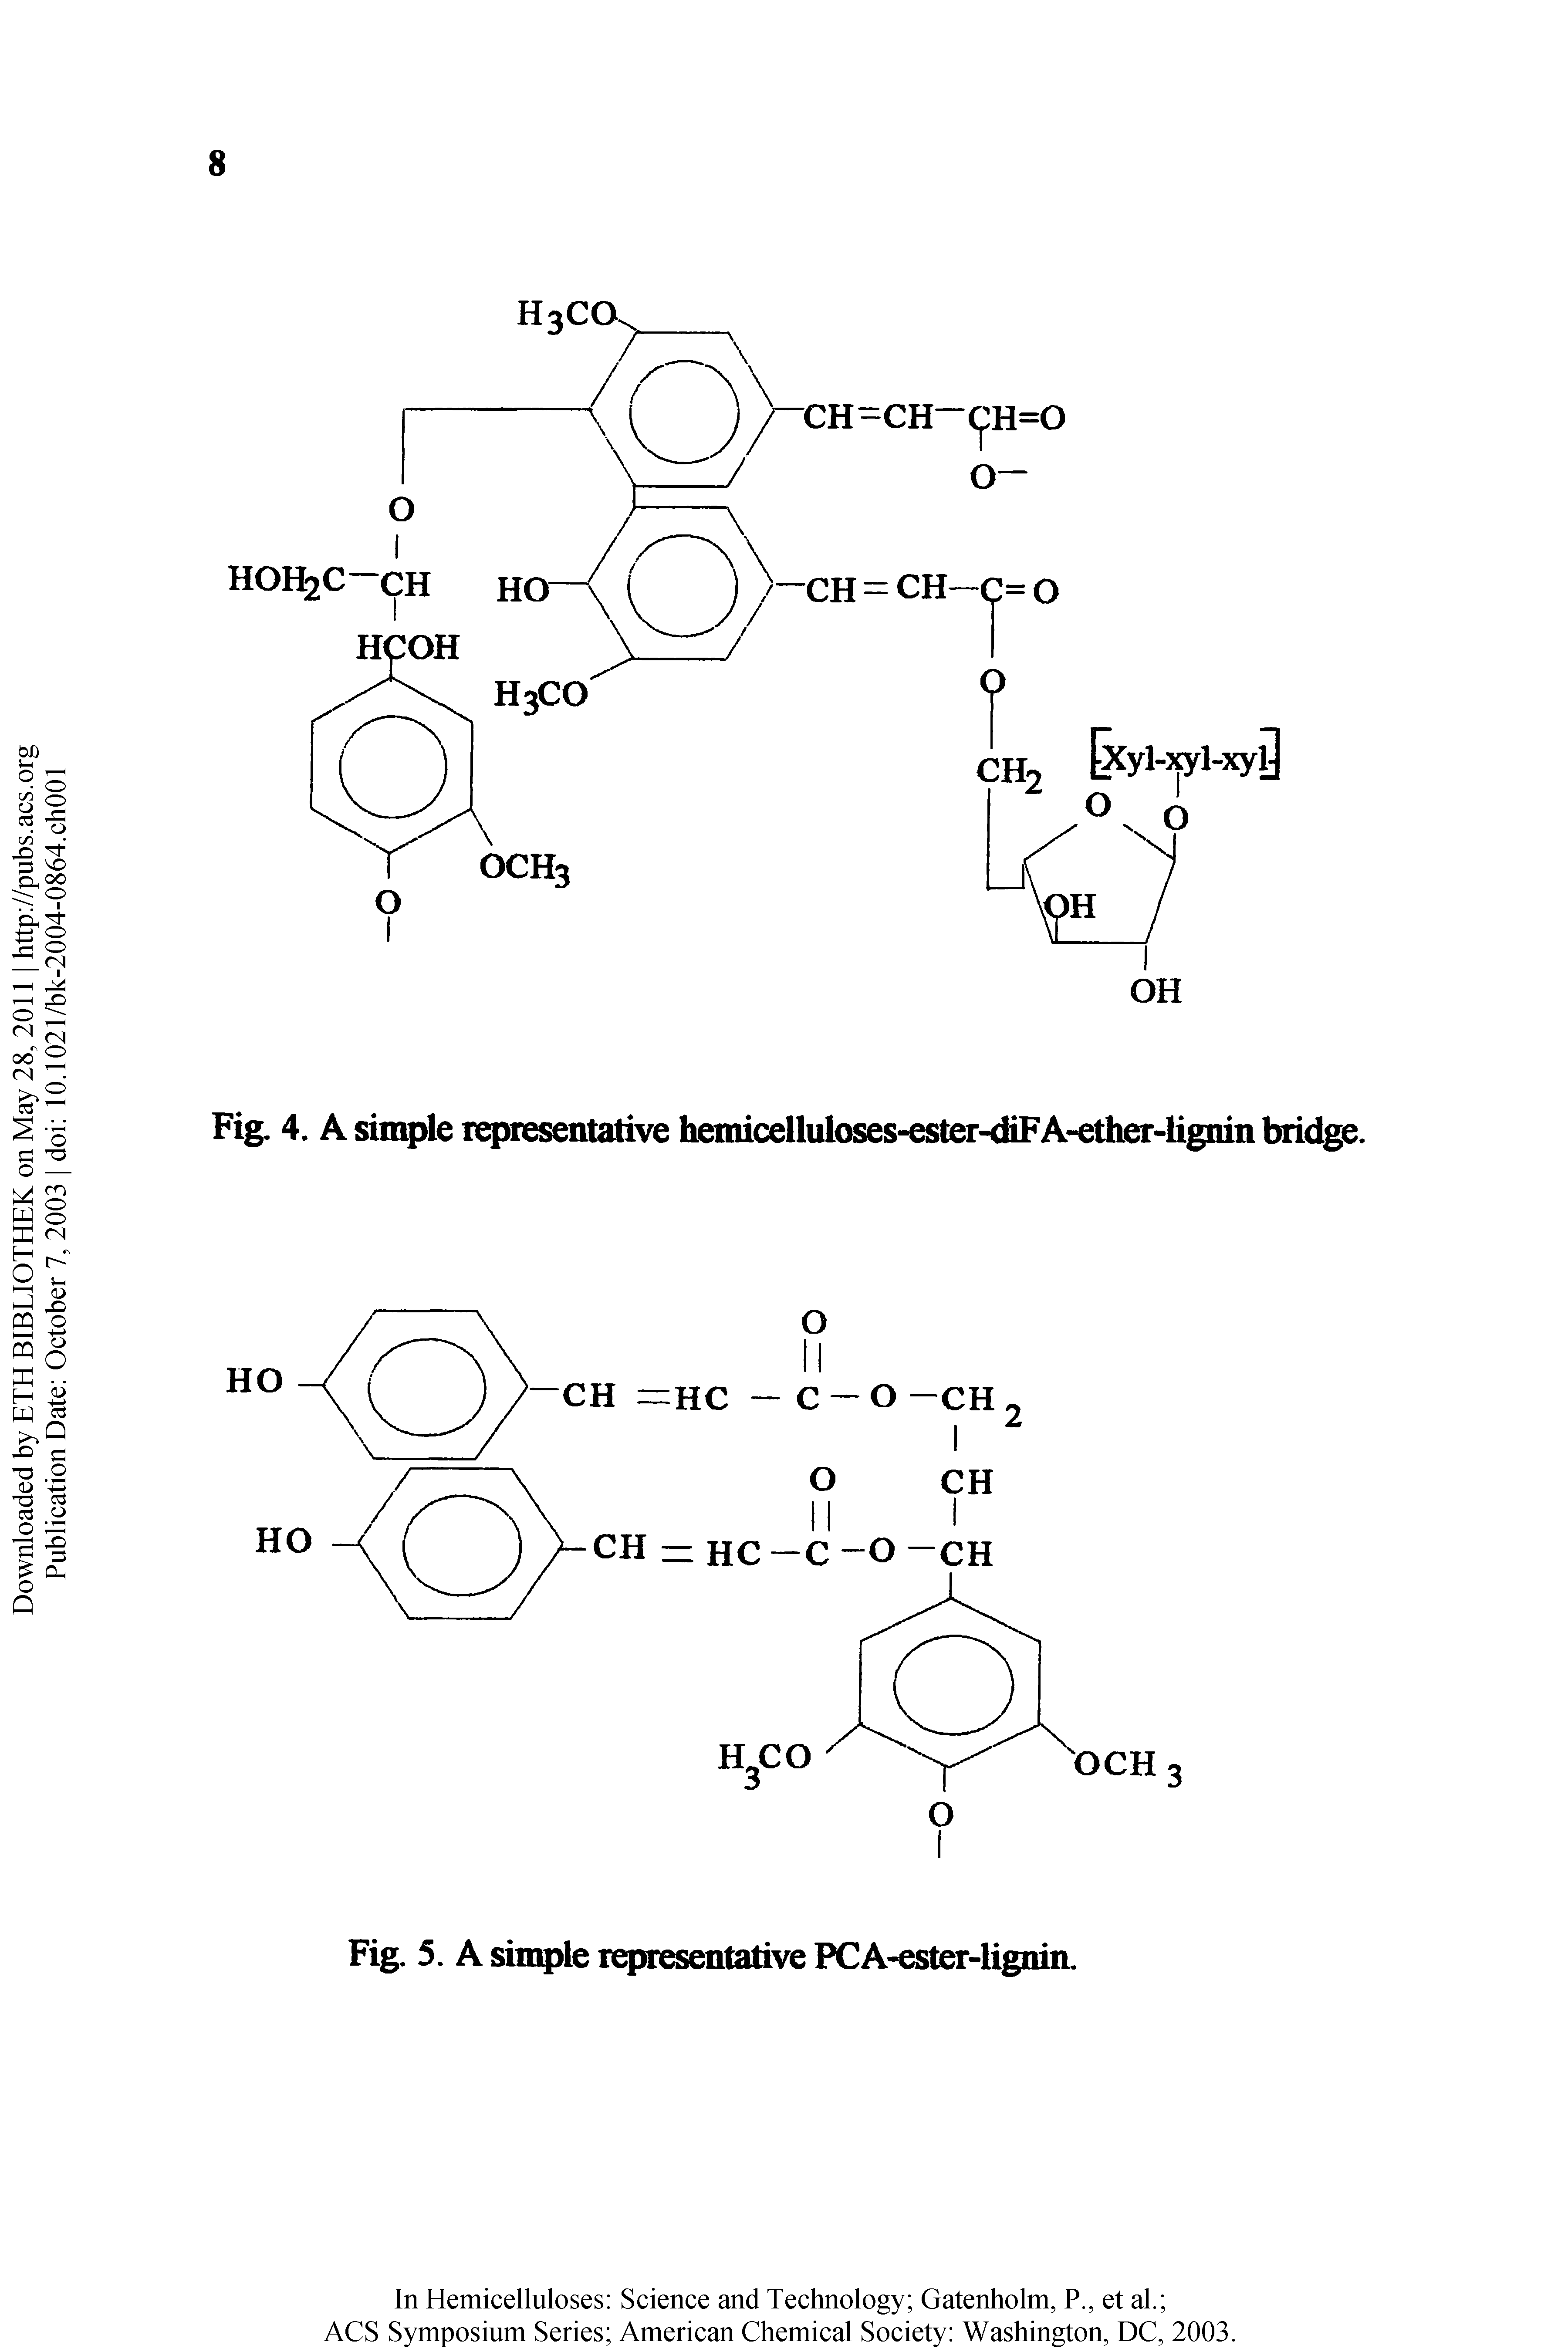 Fig. 4. A simple leptesentative hemicelluloses-ester-diFA-ether-lignin bridge.